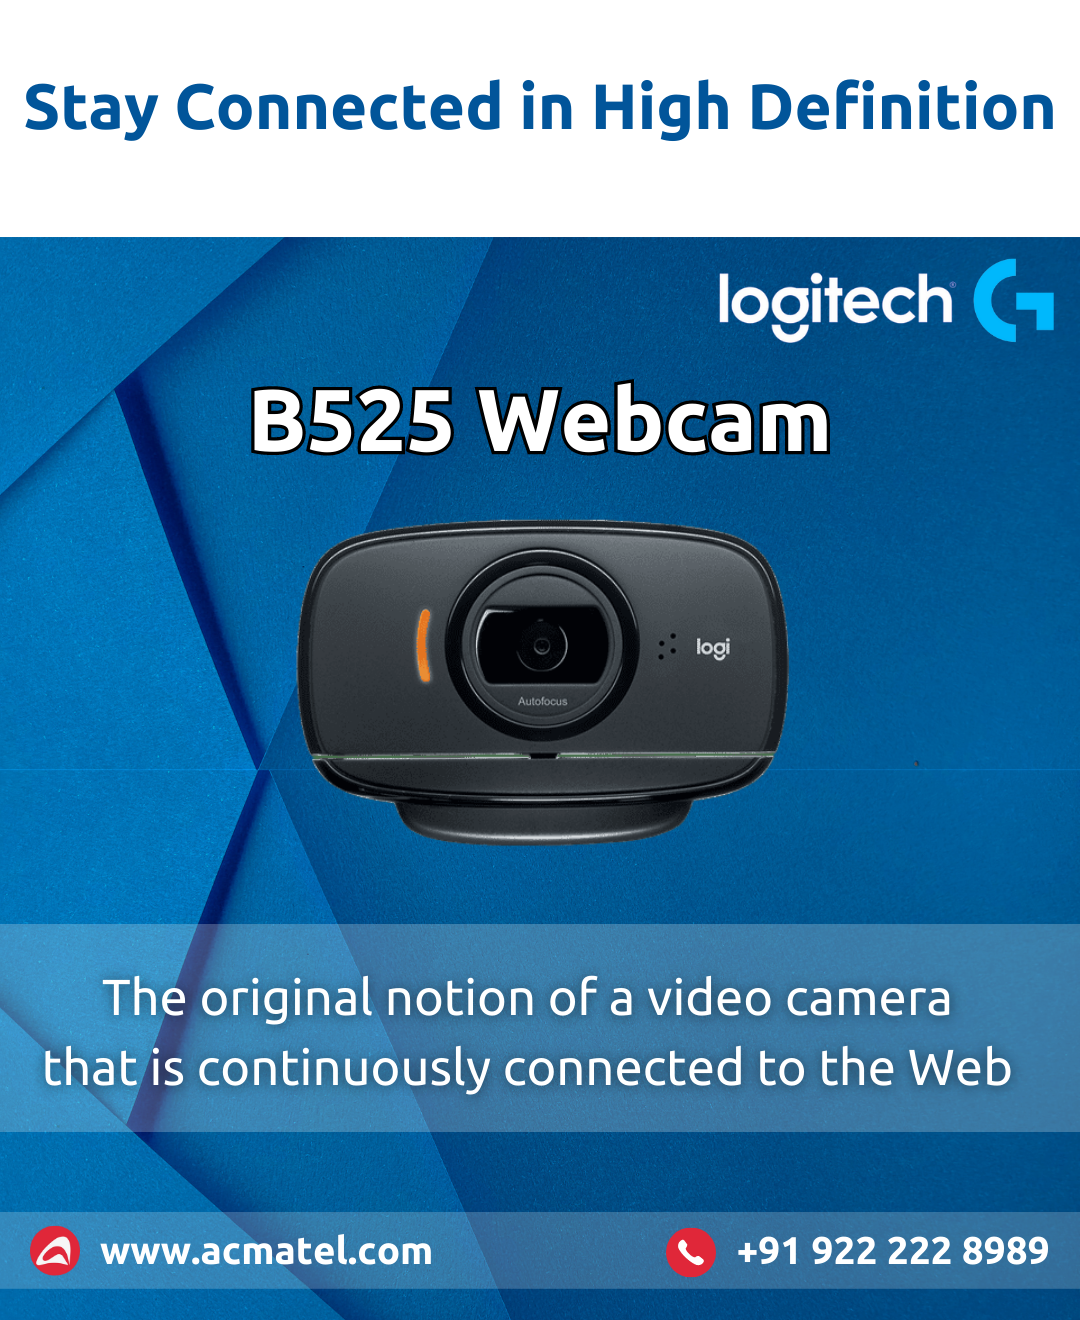 Logitech B525 Webcam | by AcmaTel Communications Pvt Ltd. | Medium